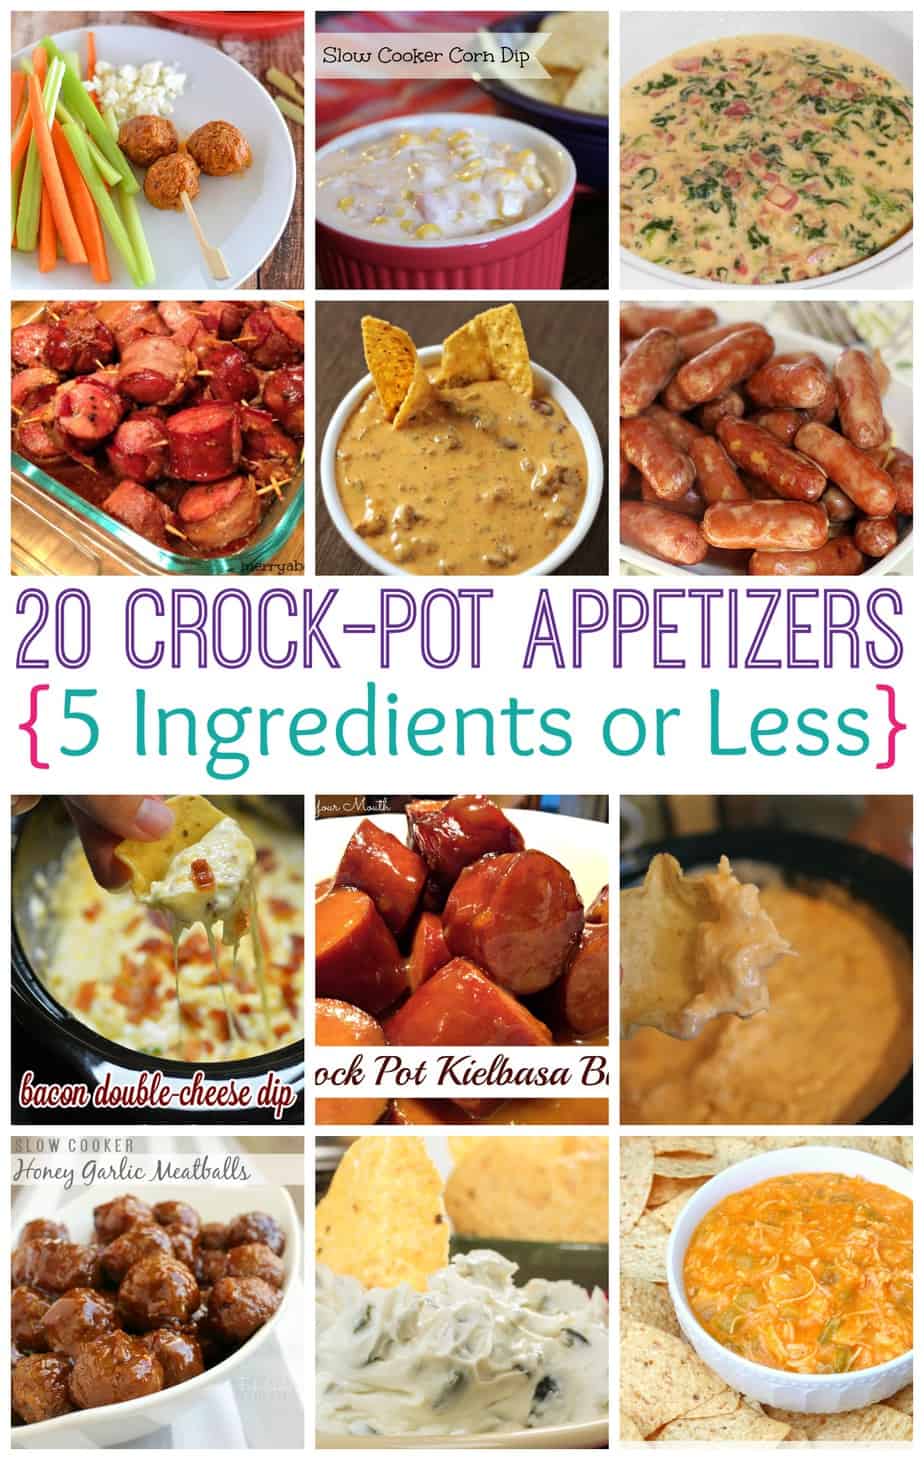 http://www.happygoluckyblog.com/wp-content/uploads/2014/12/20-Crock-Pot-Appetizers-5-Ingredients-or-Less1.jpg